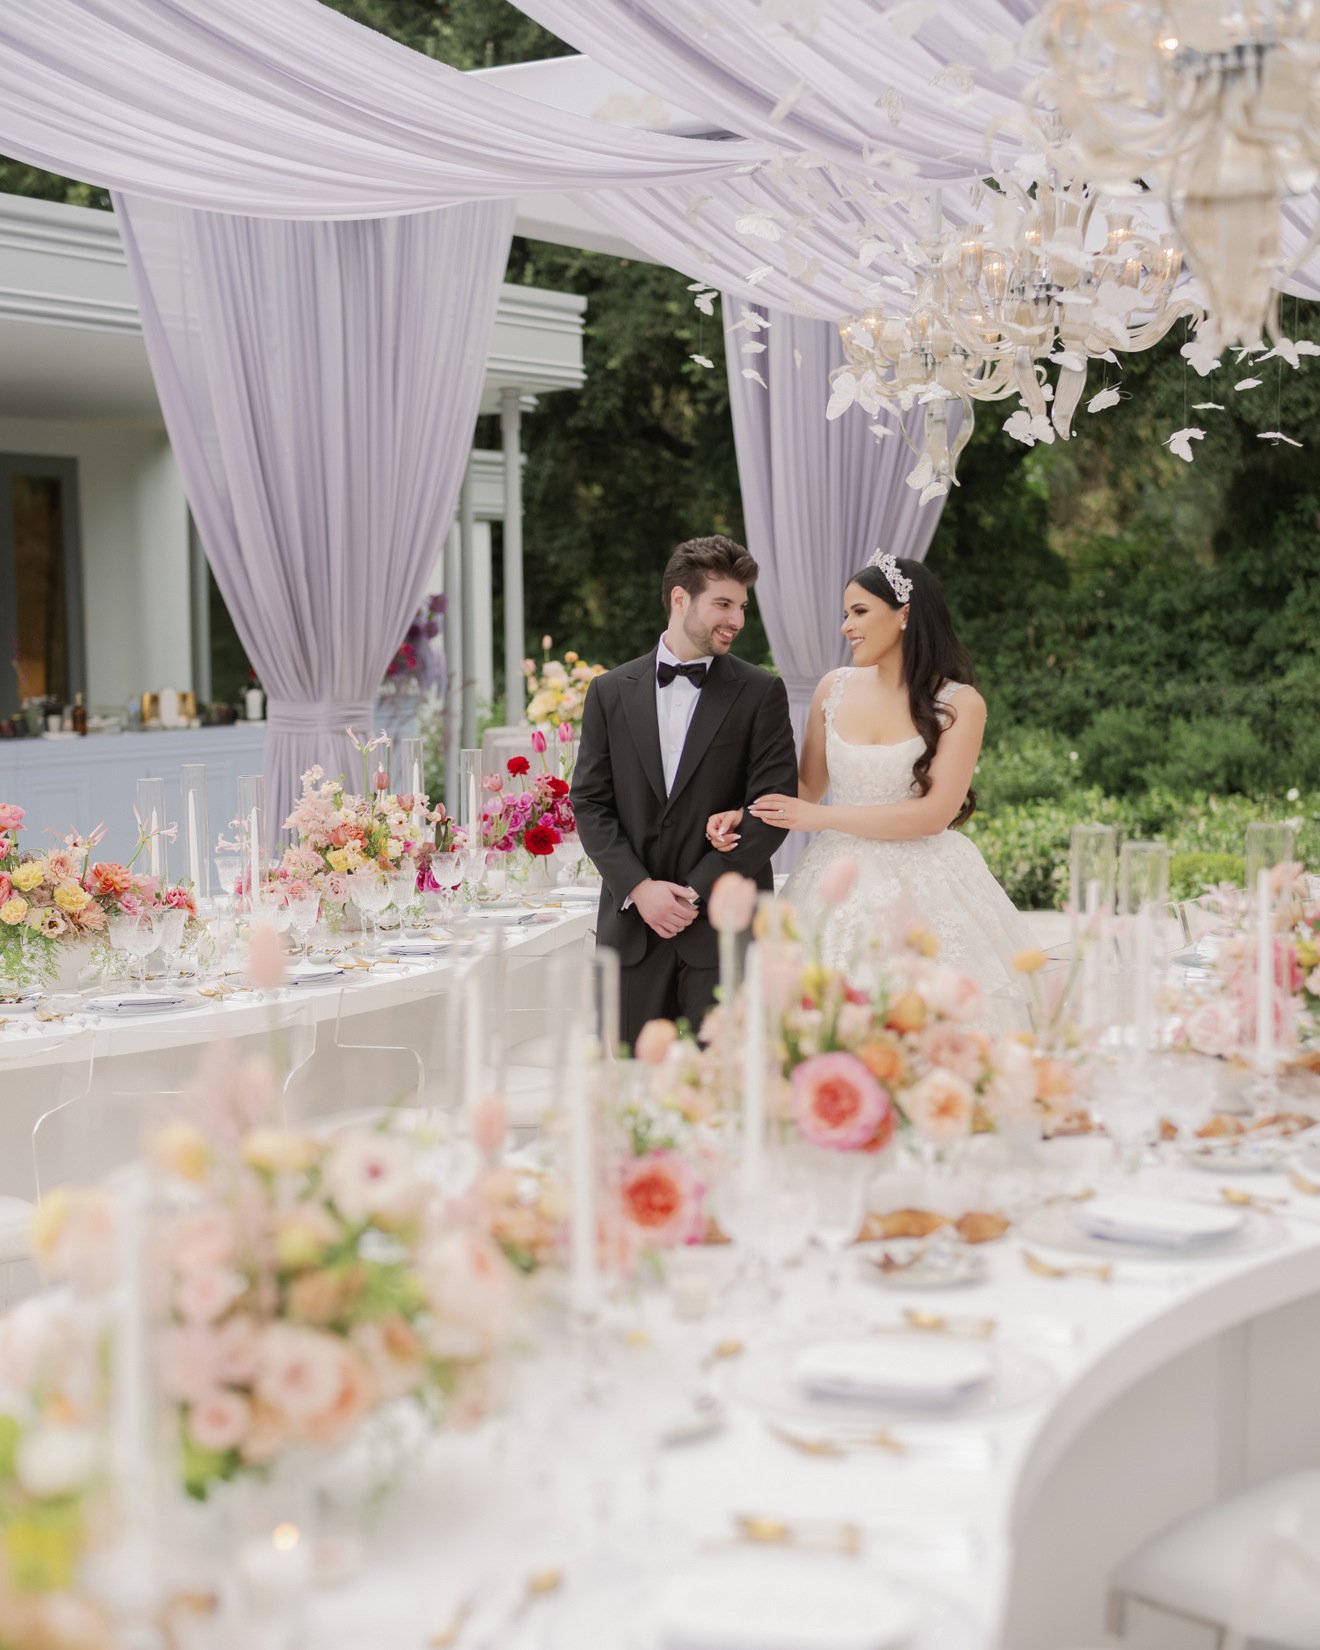 Laura And Brads Amalfi Inspired Wedding At Ricardas - Rachel A